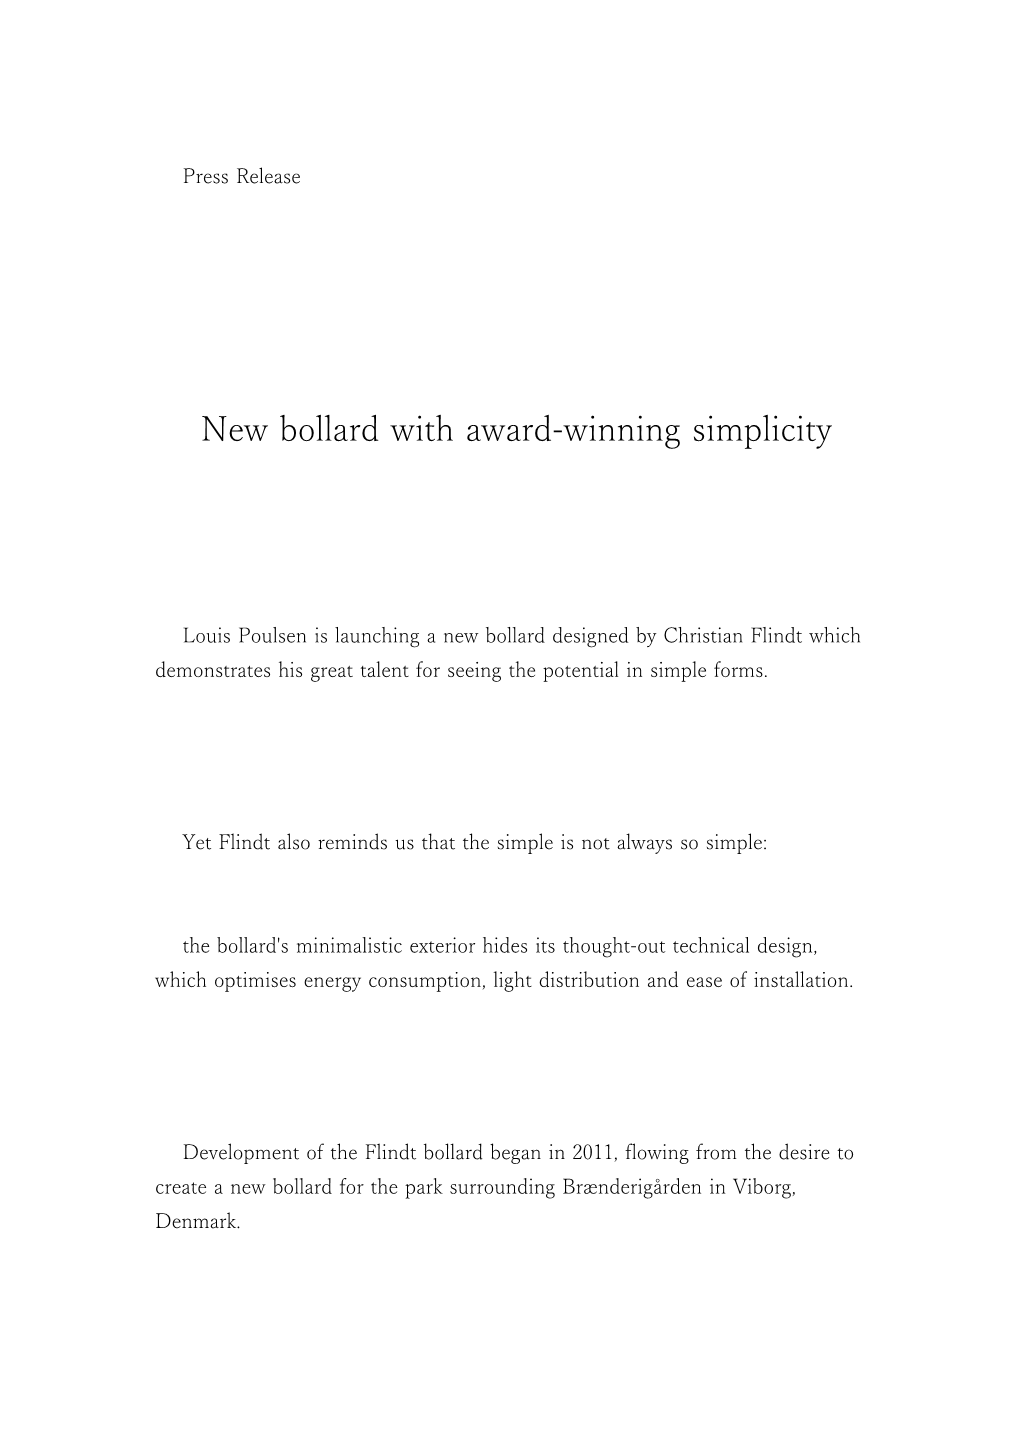 New Bollard with Award-Winning Simplicity